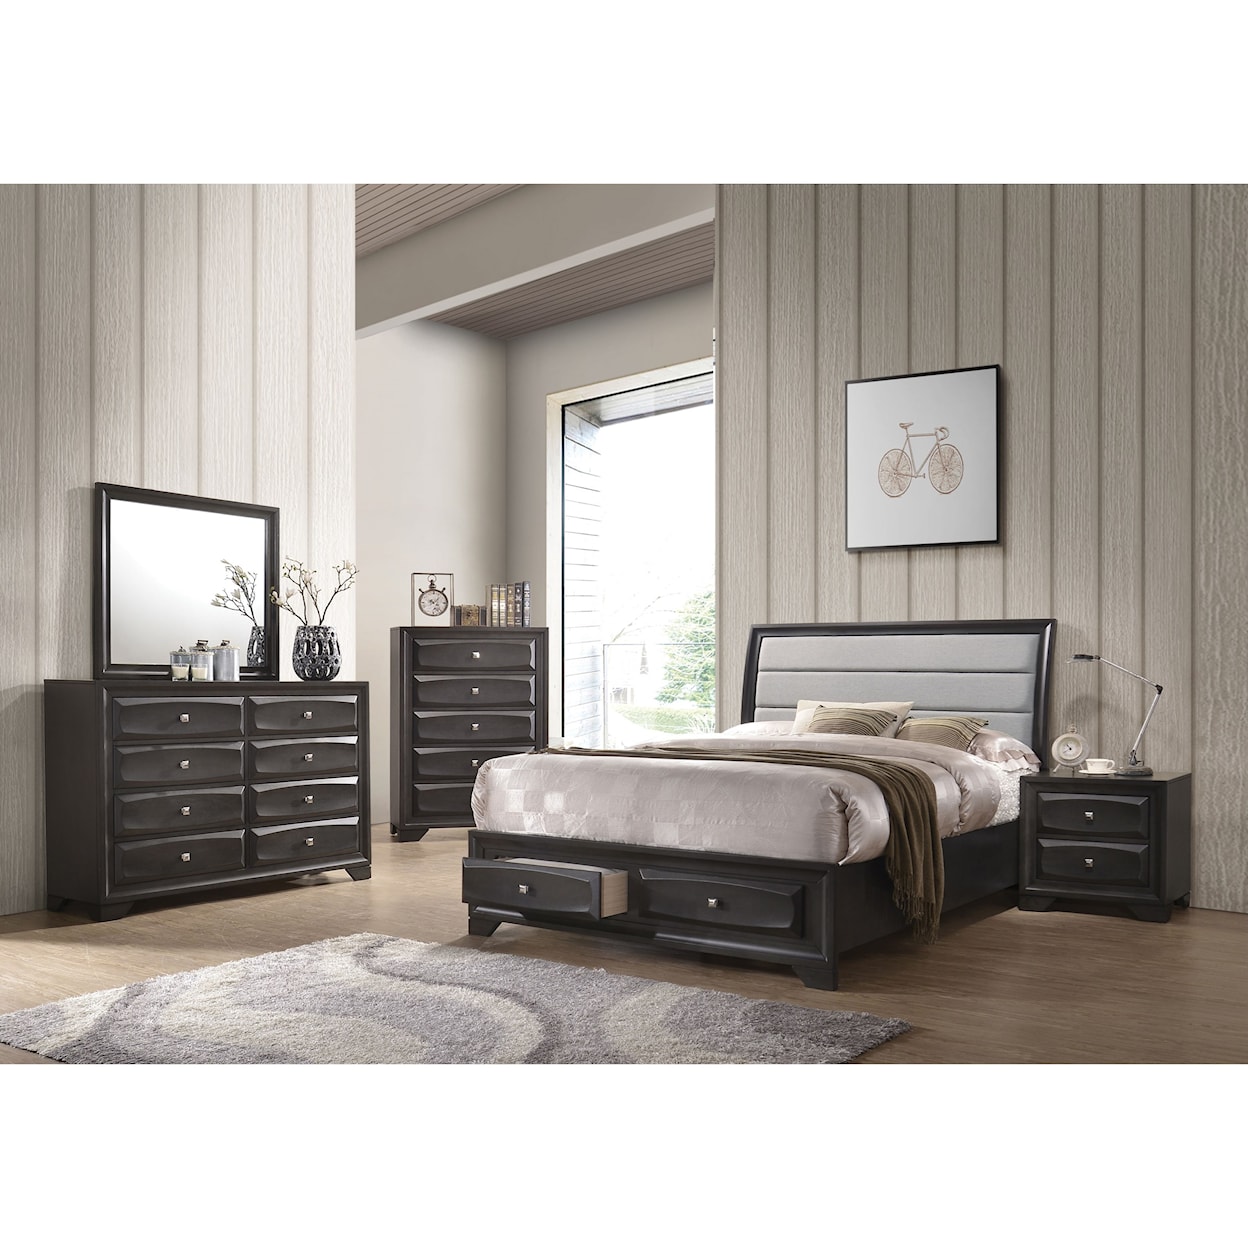 Acme Furniture Soteris King Bedroom Group